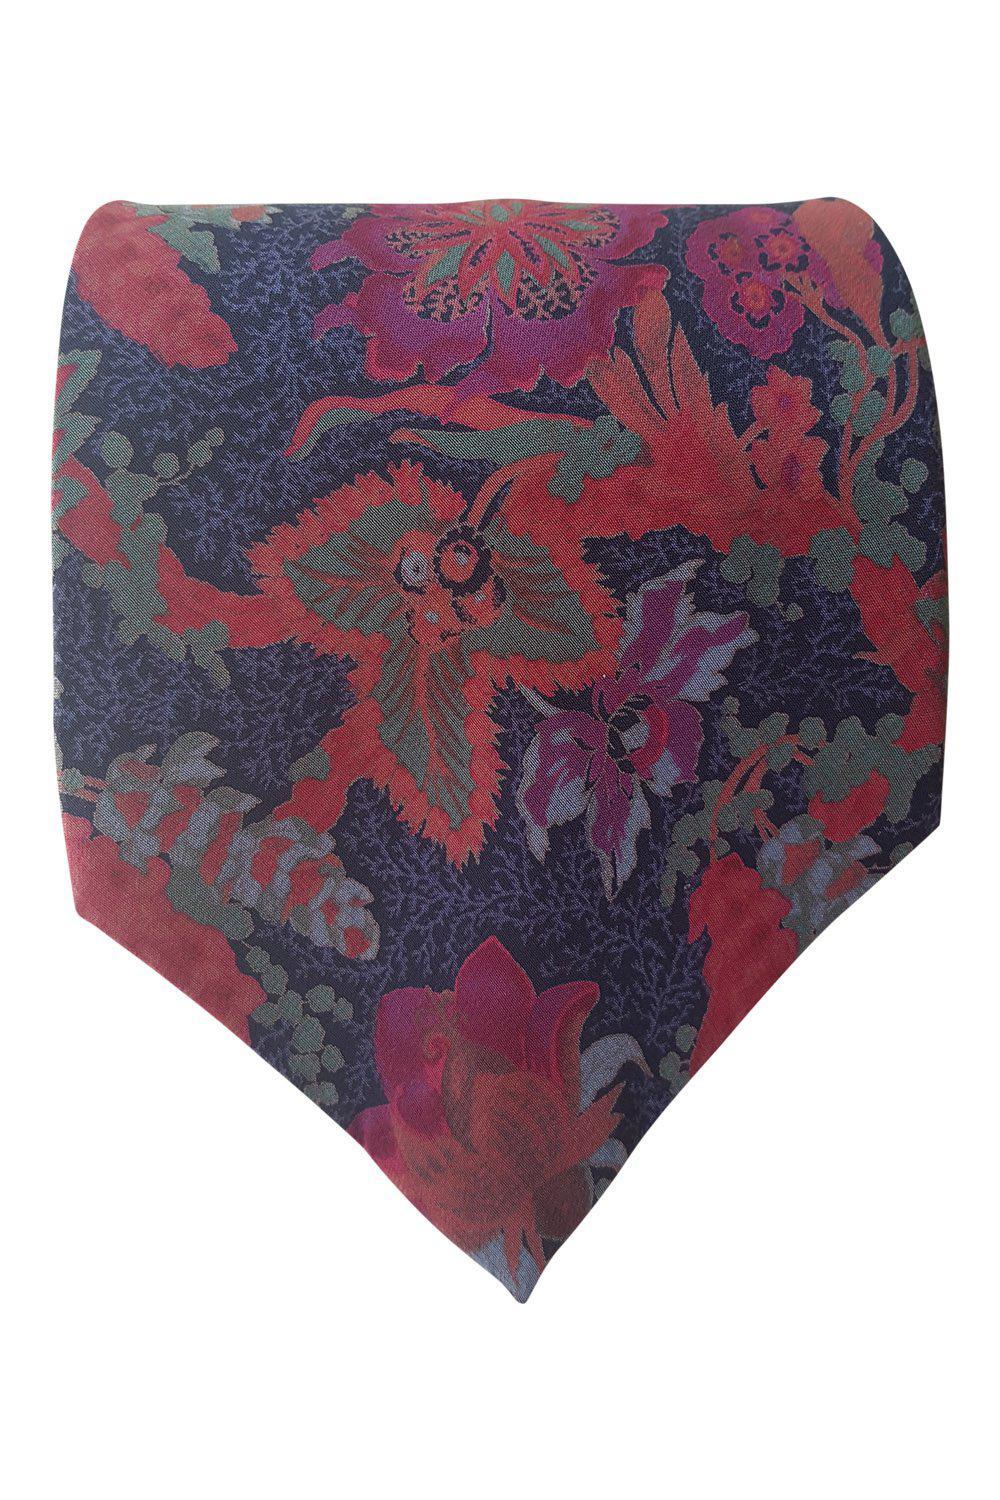 GIOVANNI BIANCHI Floral Print 100% Silk Tie (59")-Giovanni Bianchi-The Freperie